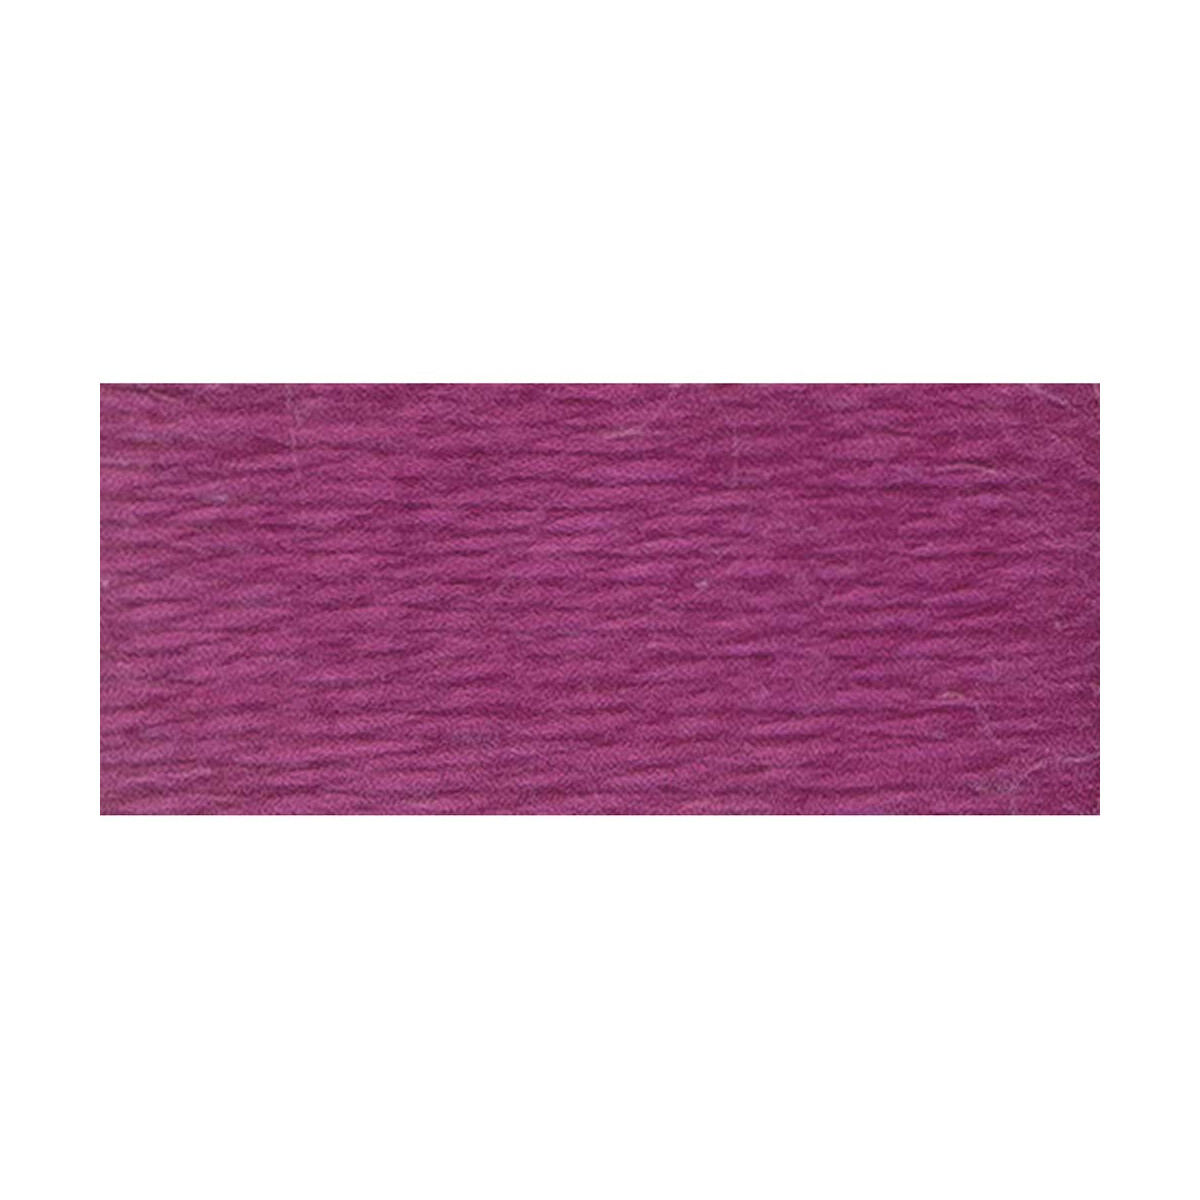 RIOLIS woolen embroidery thread  S529 woolen/acrylic...